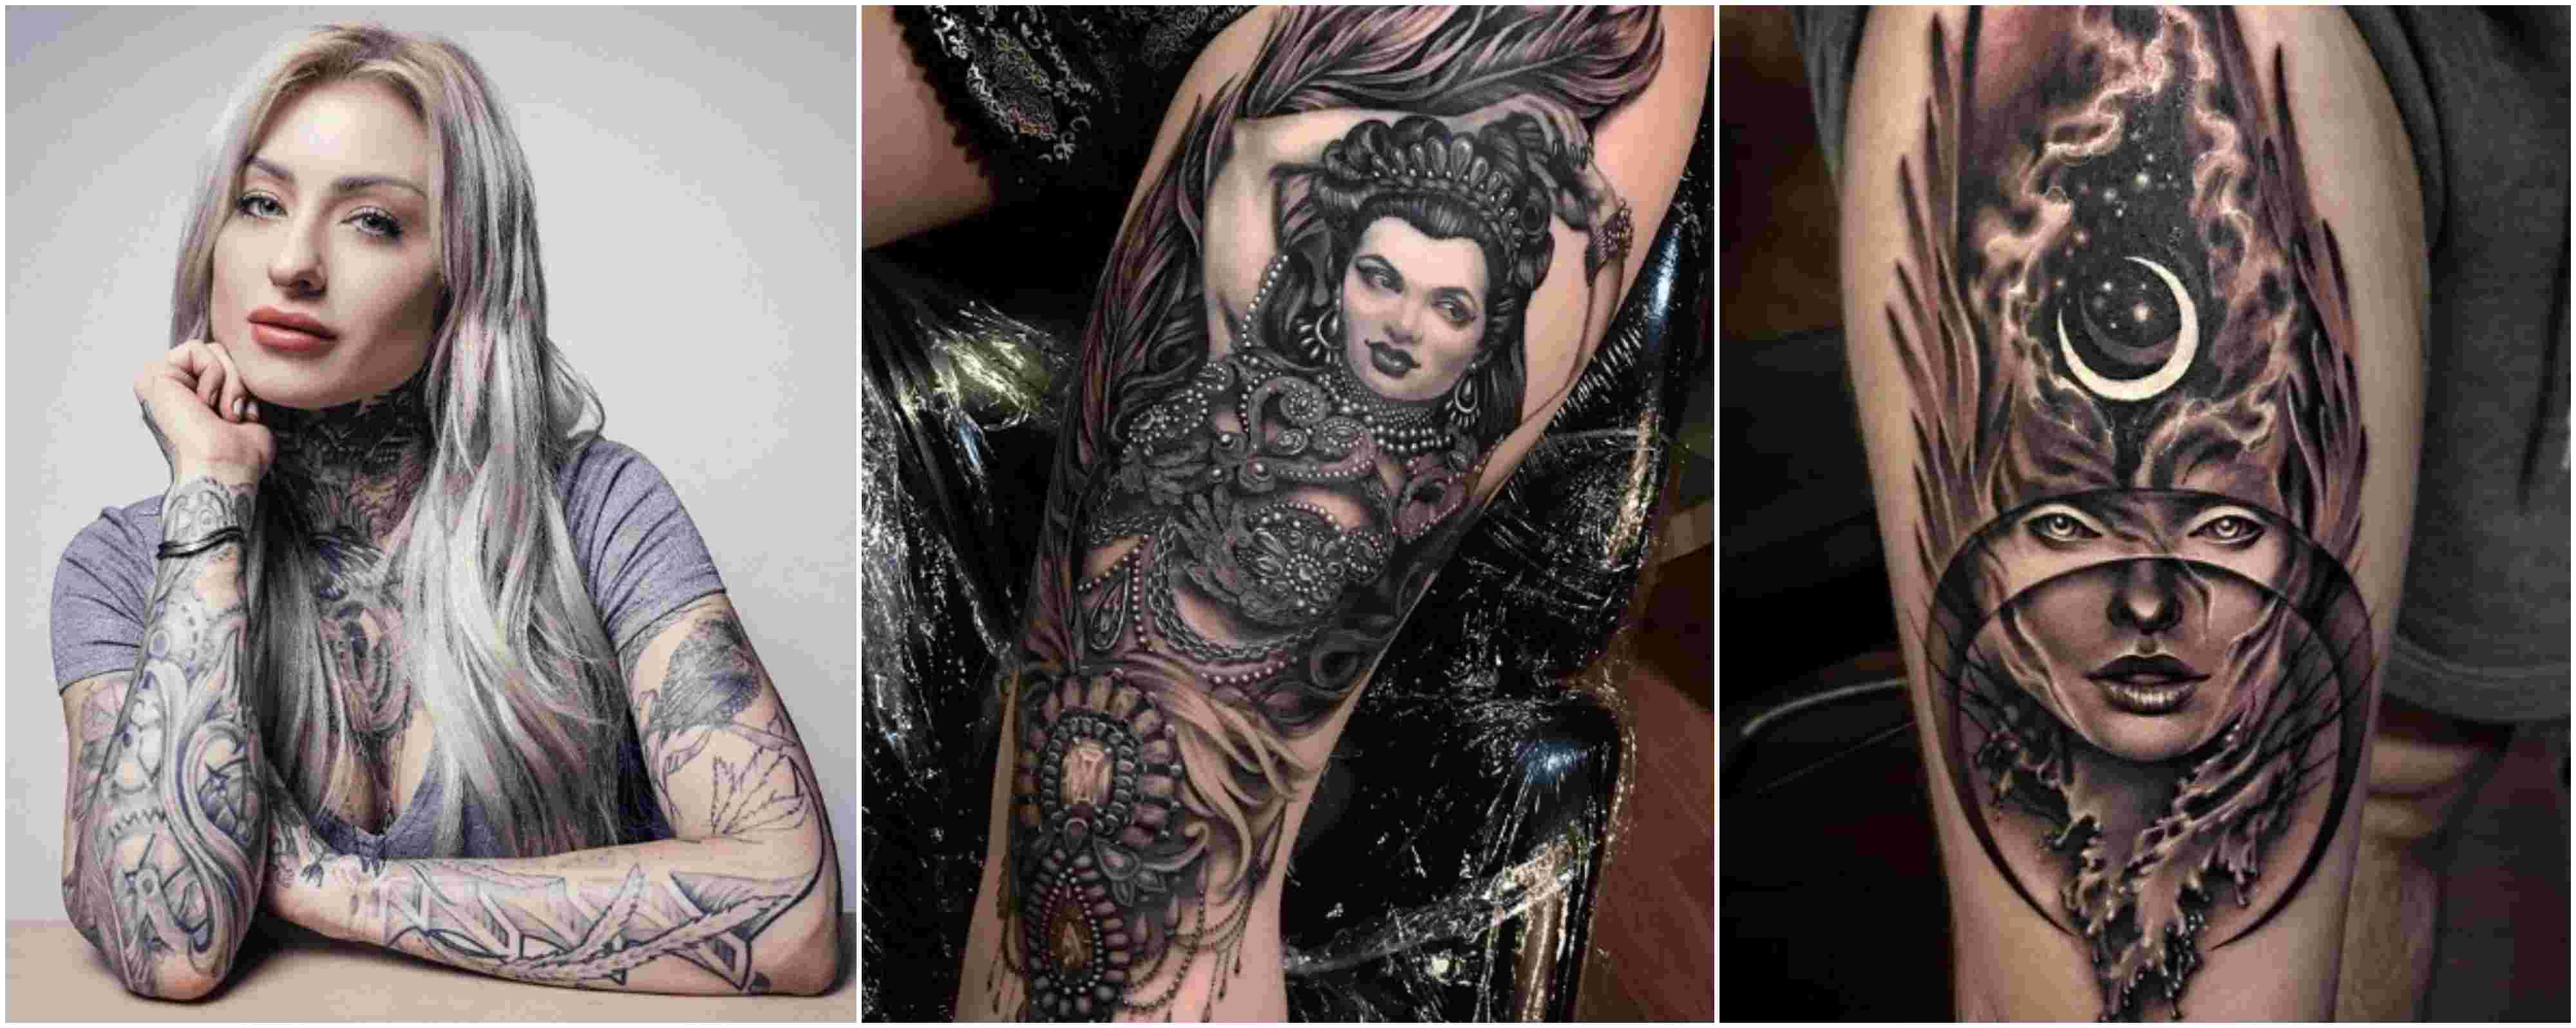 12 Most Badass Female Tattoo Artists - Controse